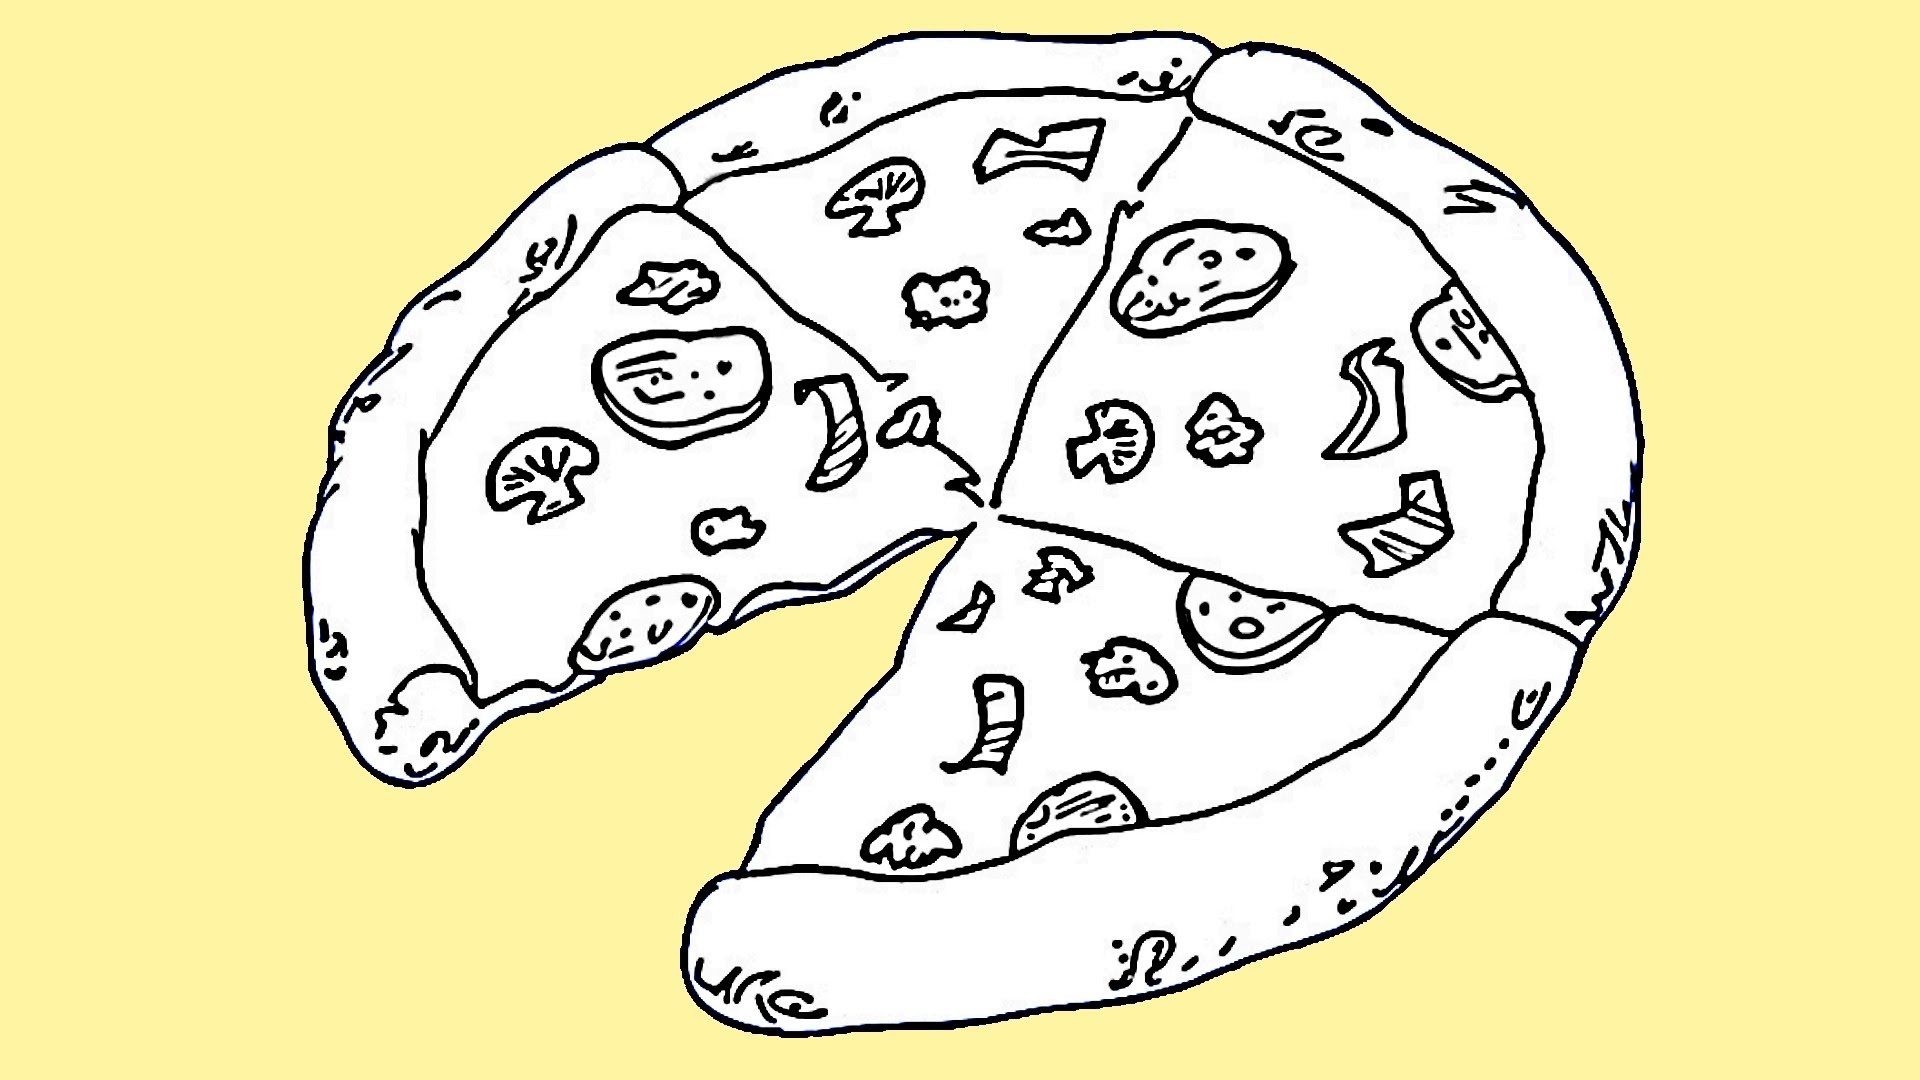 Пицца черно белая. Пицца раскраска для детей. Пицца рисунок. Пицца рисунок карандашом. Пицца картинка для детей раскраска.